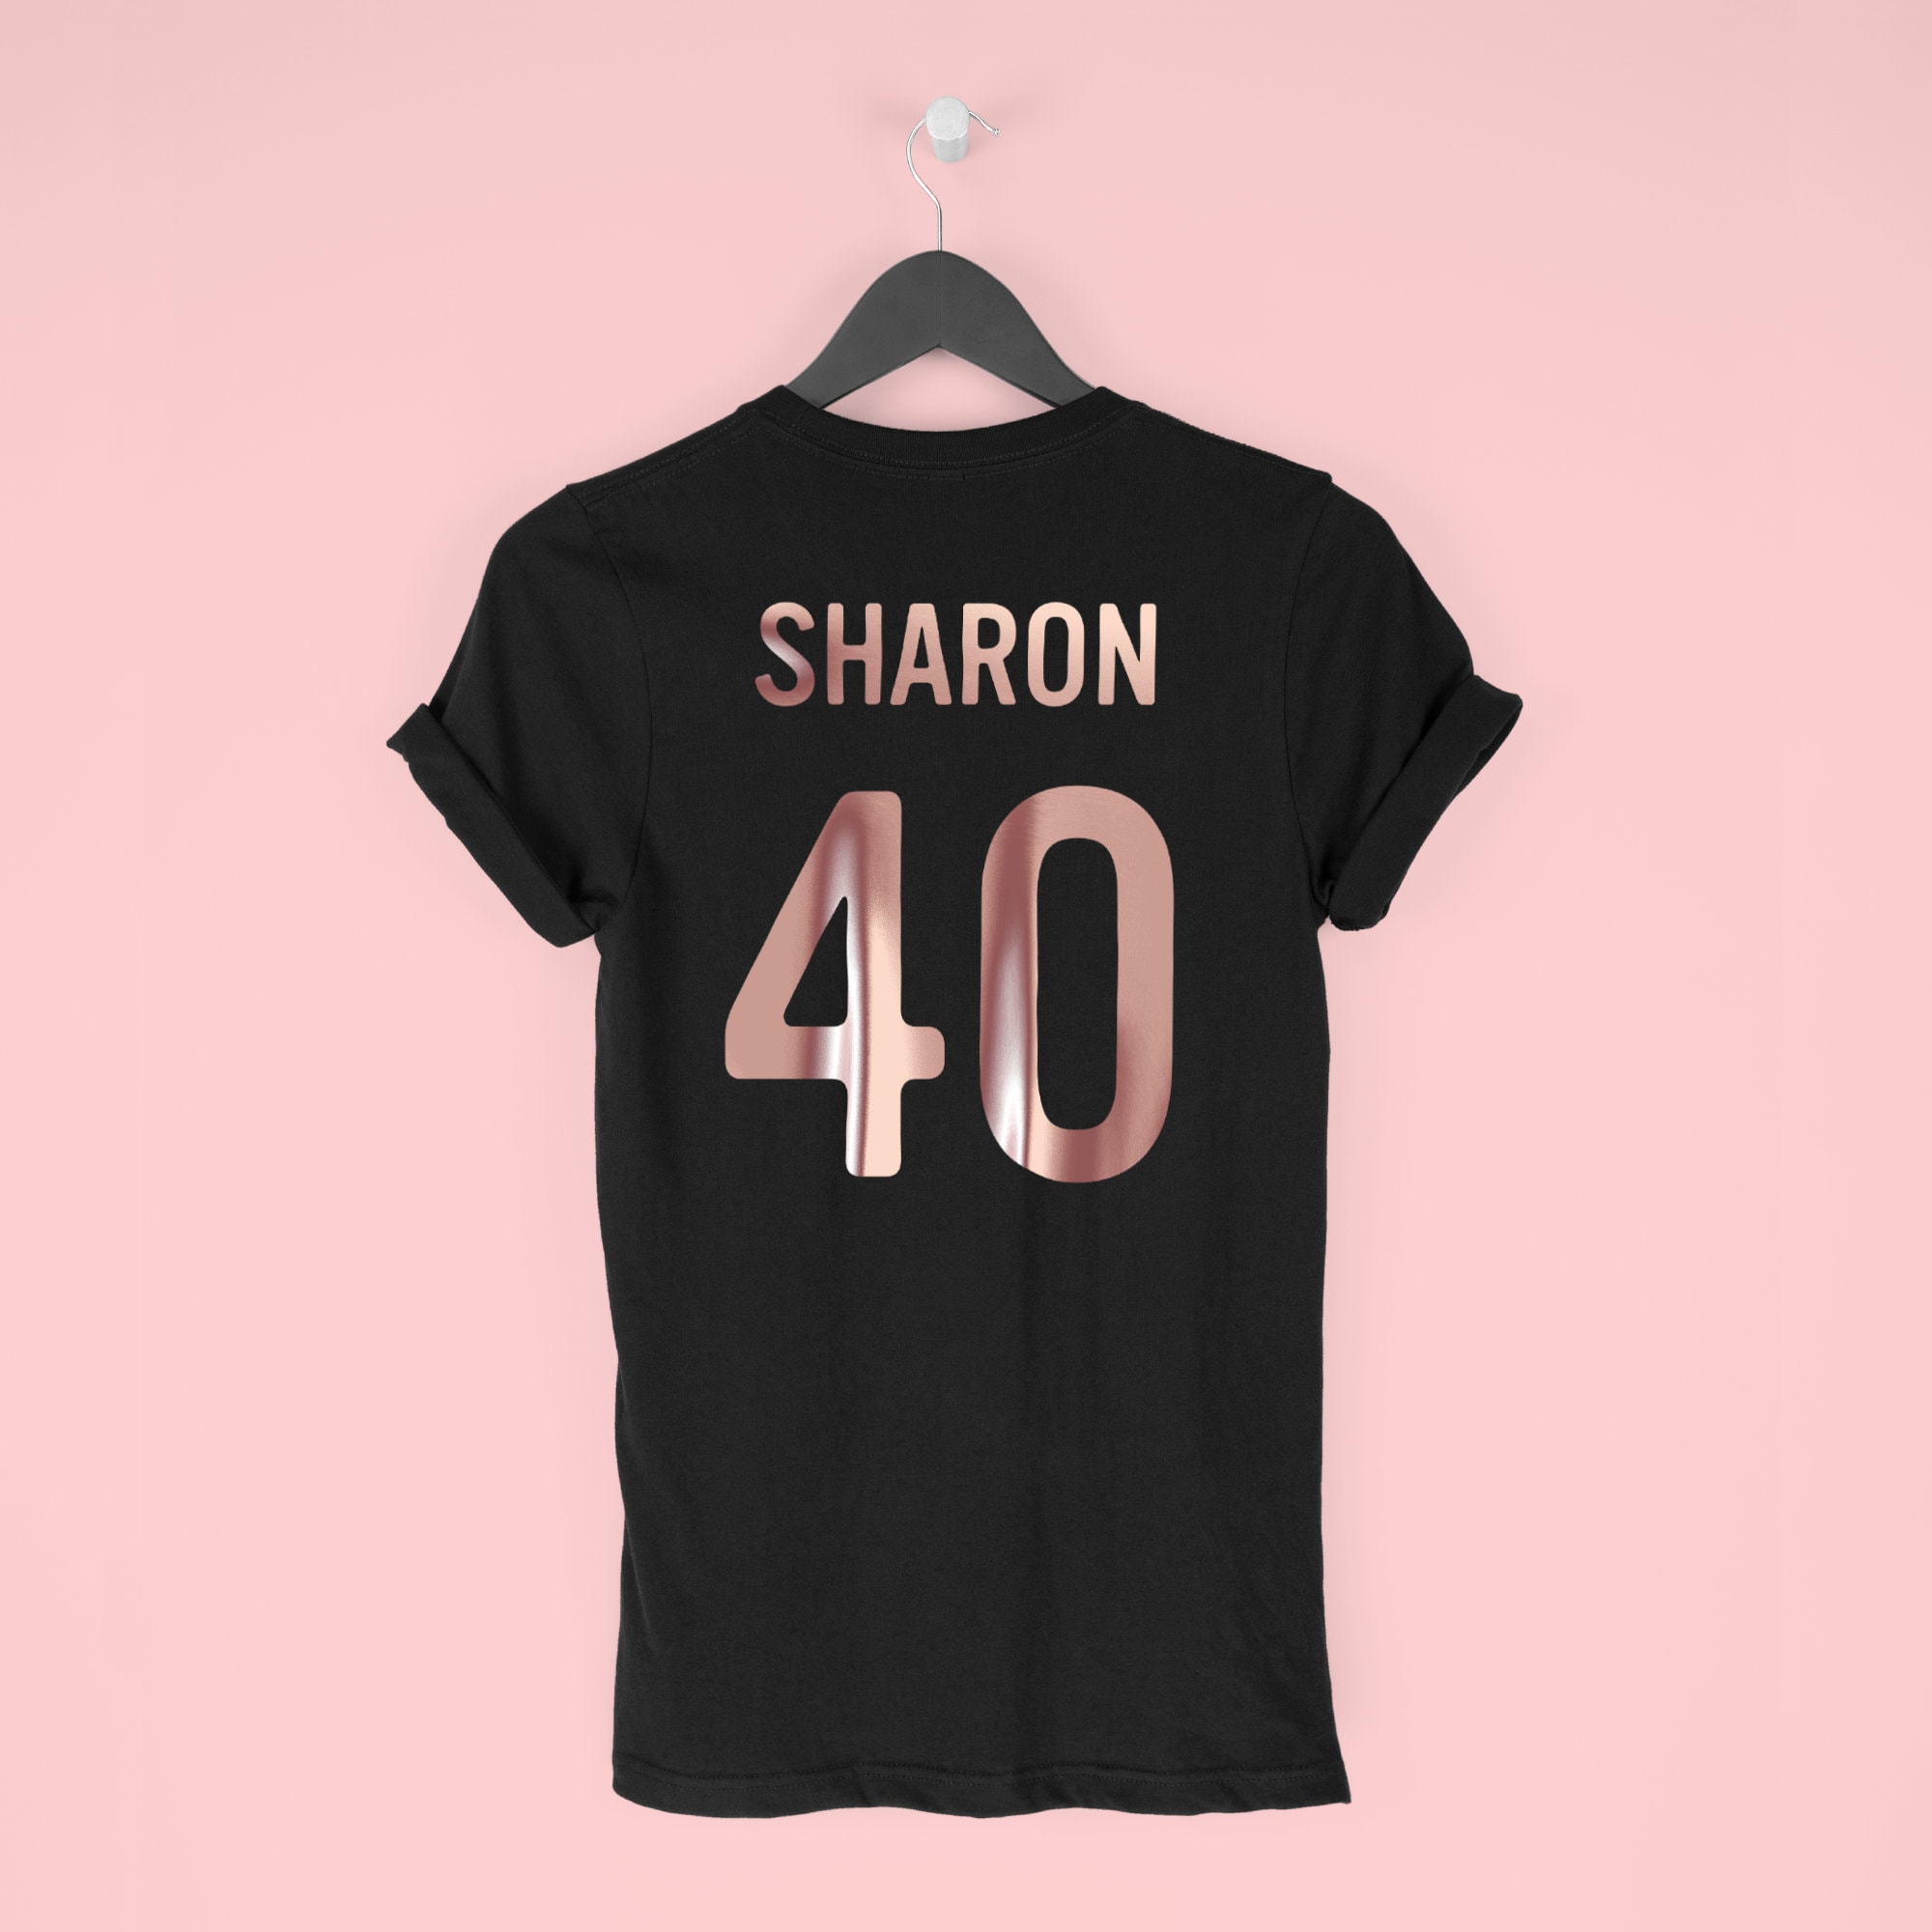 Discover 40th Birthday T-Shirt for Women, 1983 T-Shirt, 40th Birthday T-Shirt